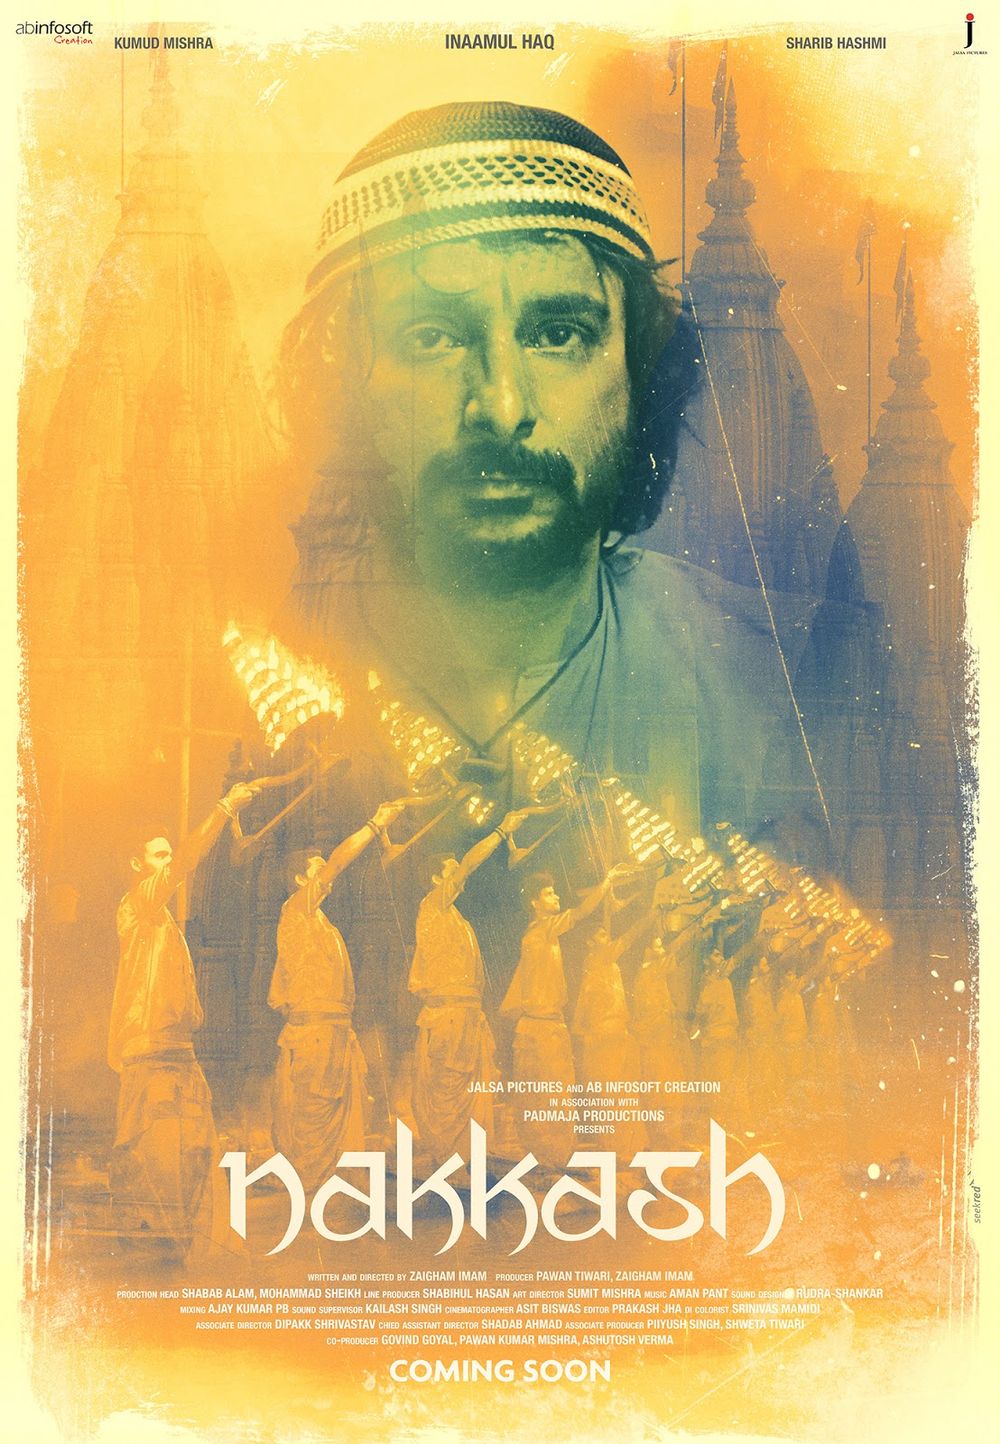 Nakkash Movie Review